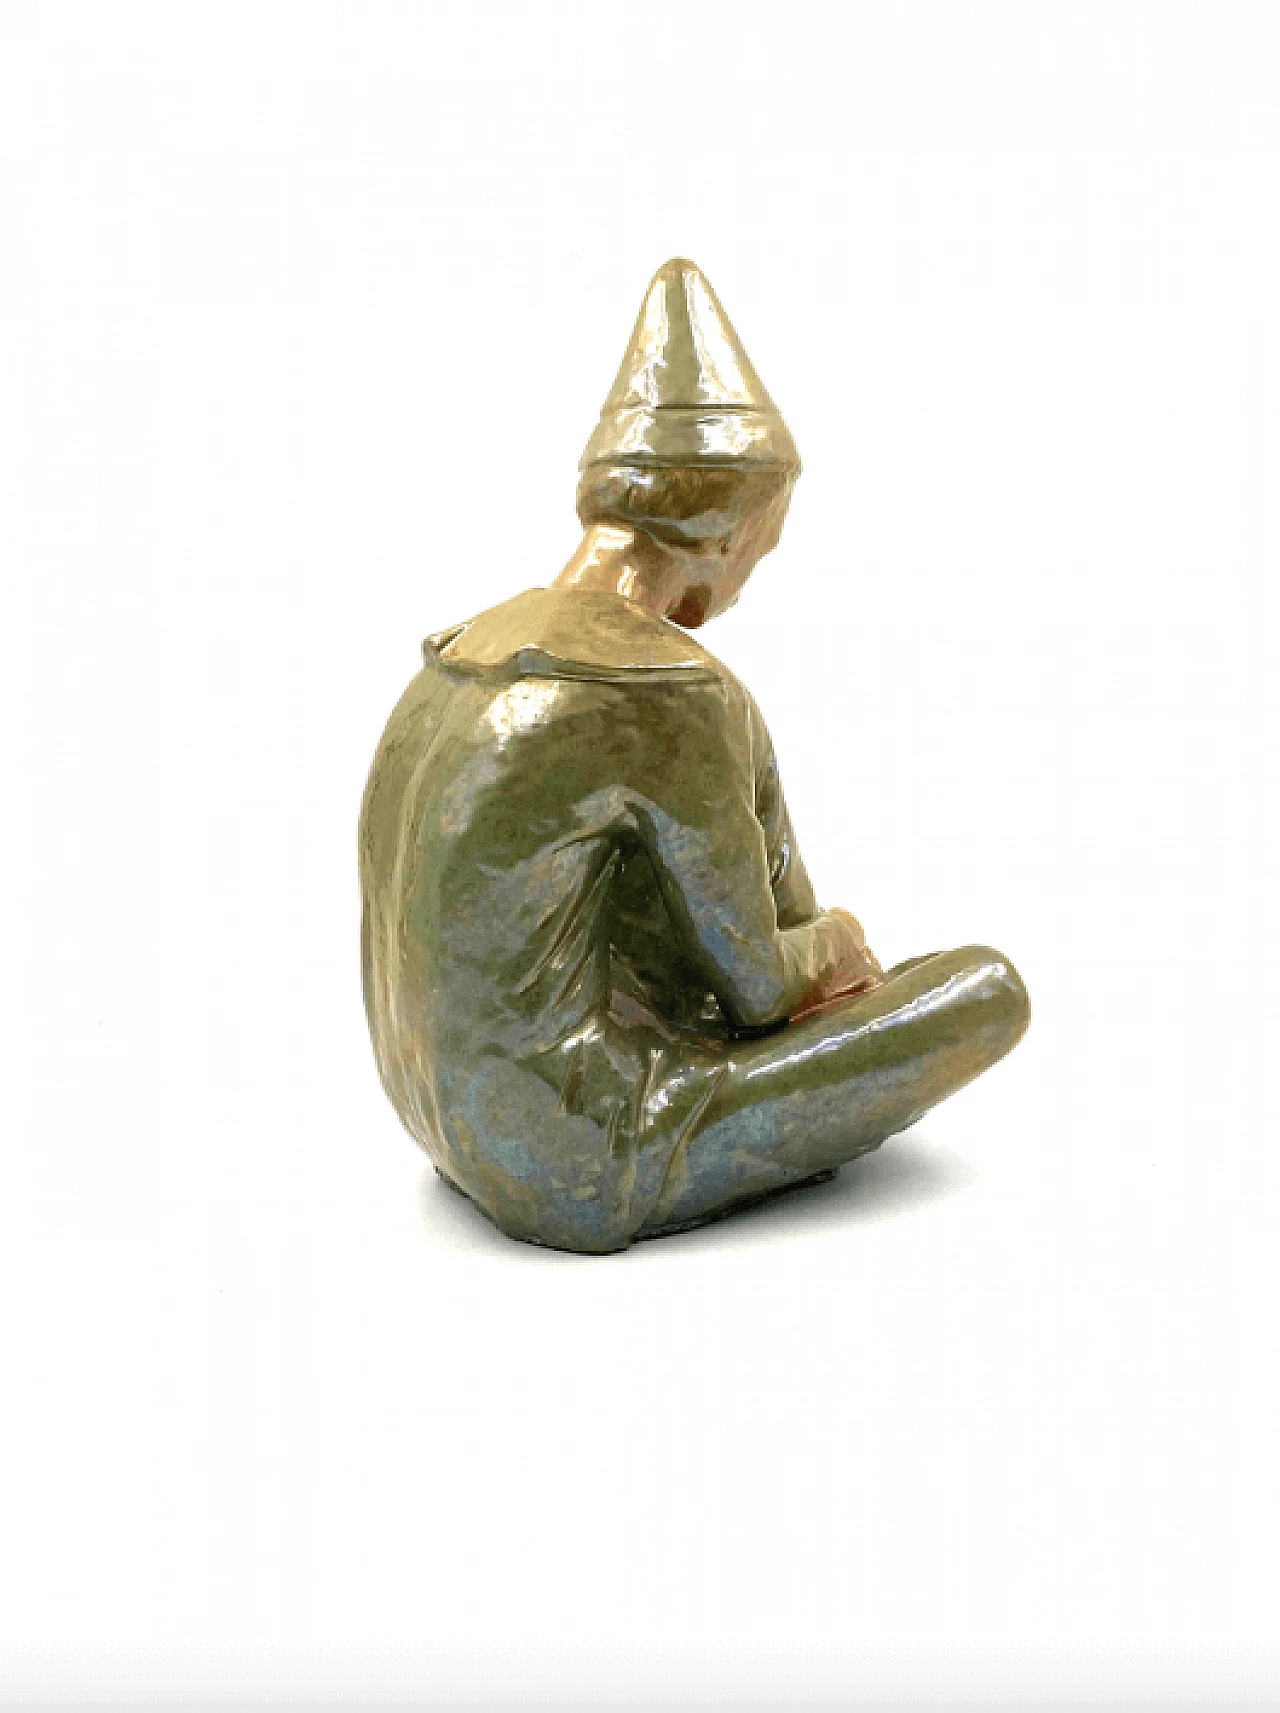 Giordano Tronconi, Seated boy, green ceramic figure from Faenza, 1950s 62